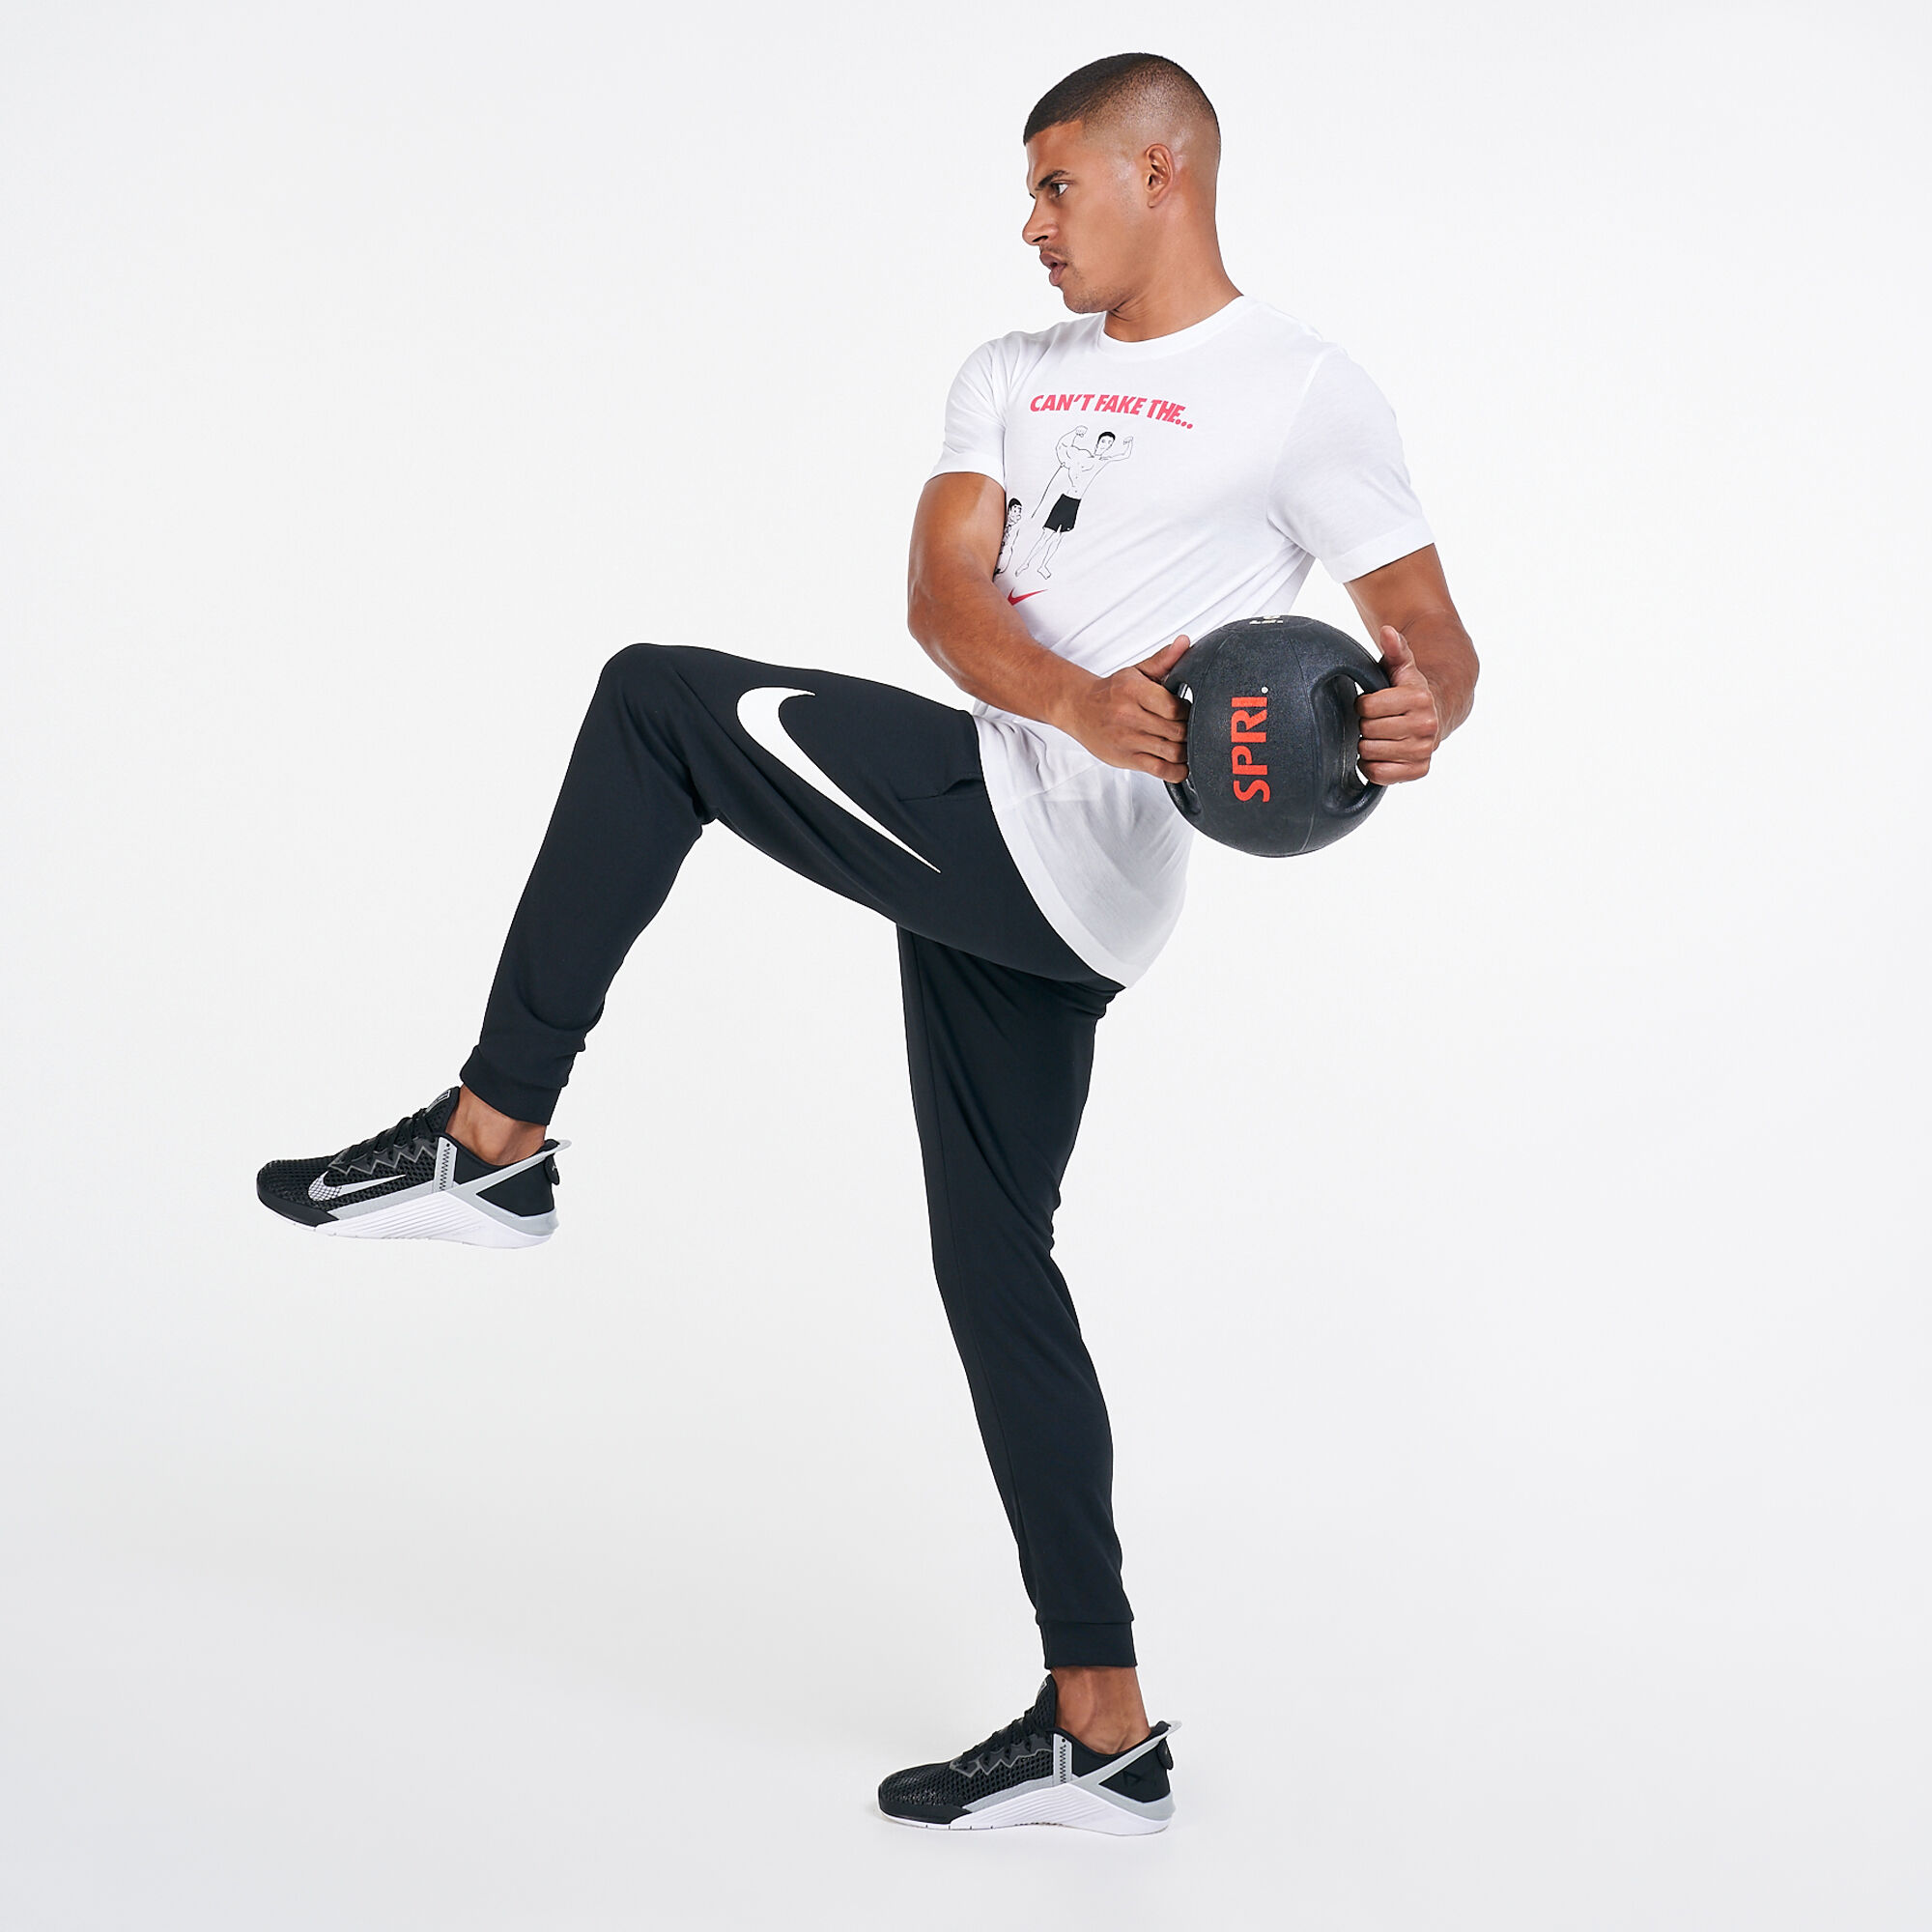 Nike | Dri-FIT Track Club Men's Running Pants | Performance Tracksuit  Bottoms | SportsDirect.com